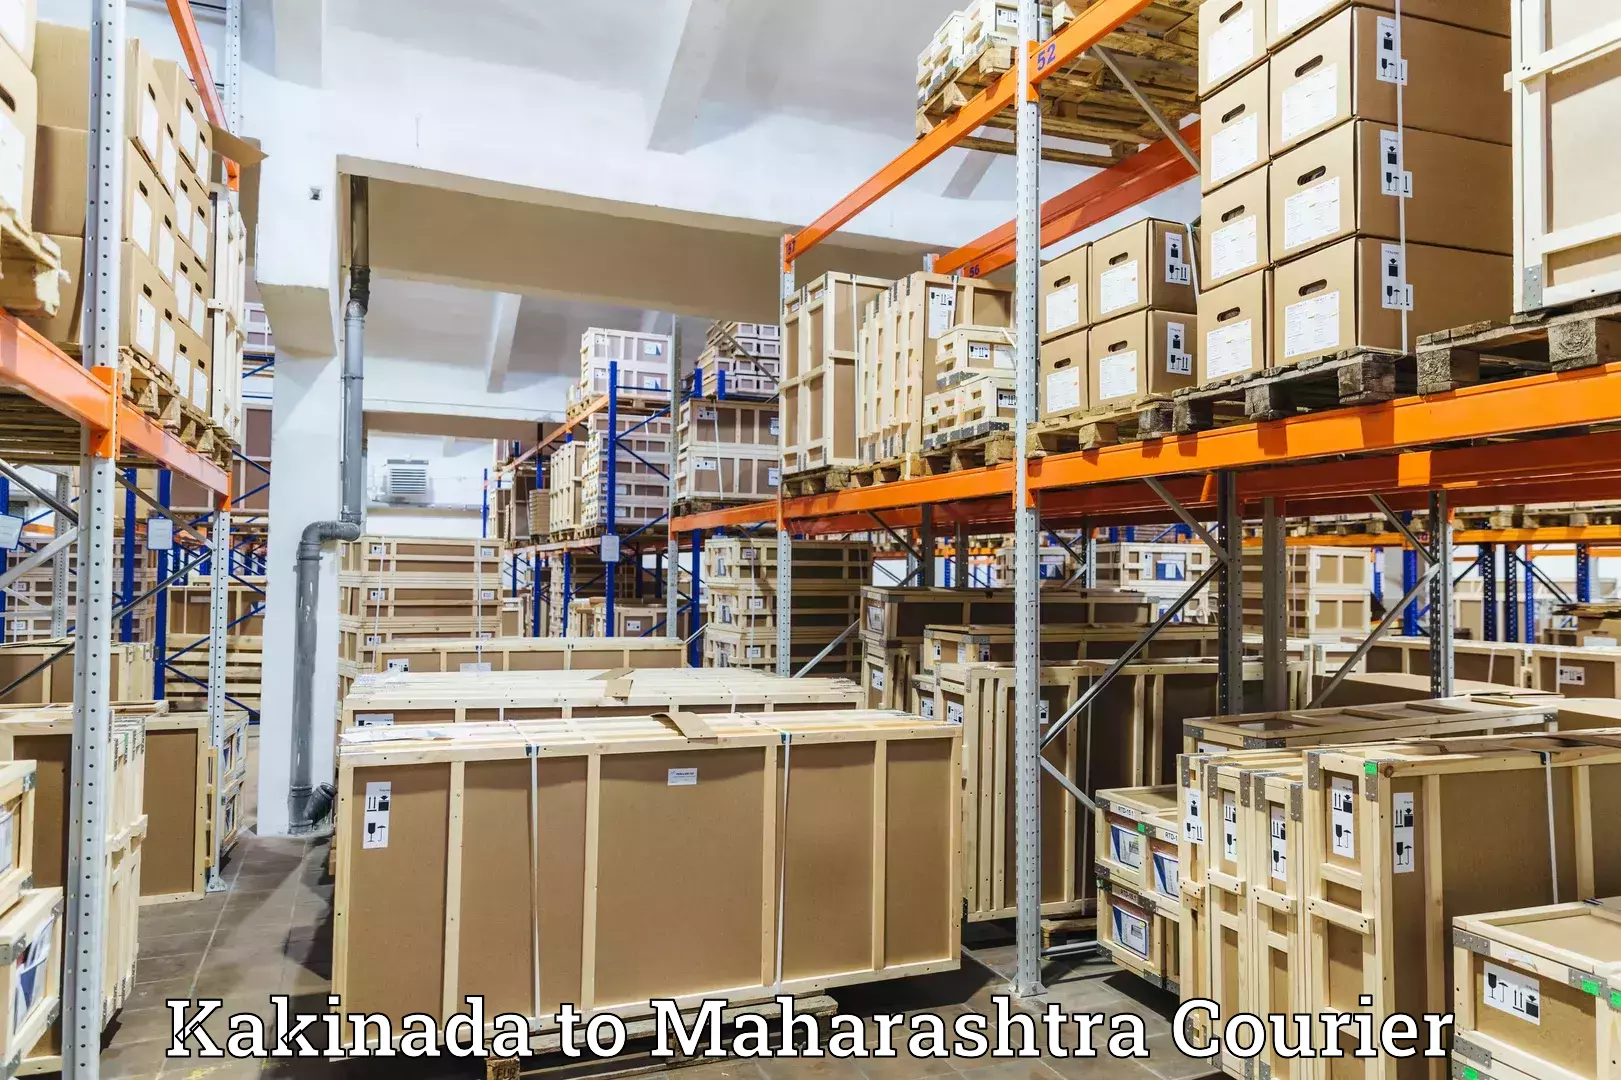 Delivery service partnership Kakinada to Chandwad